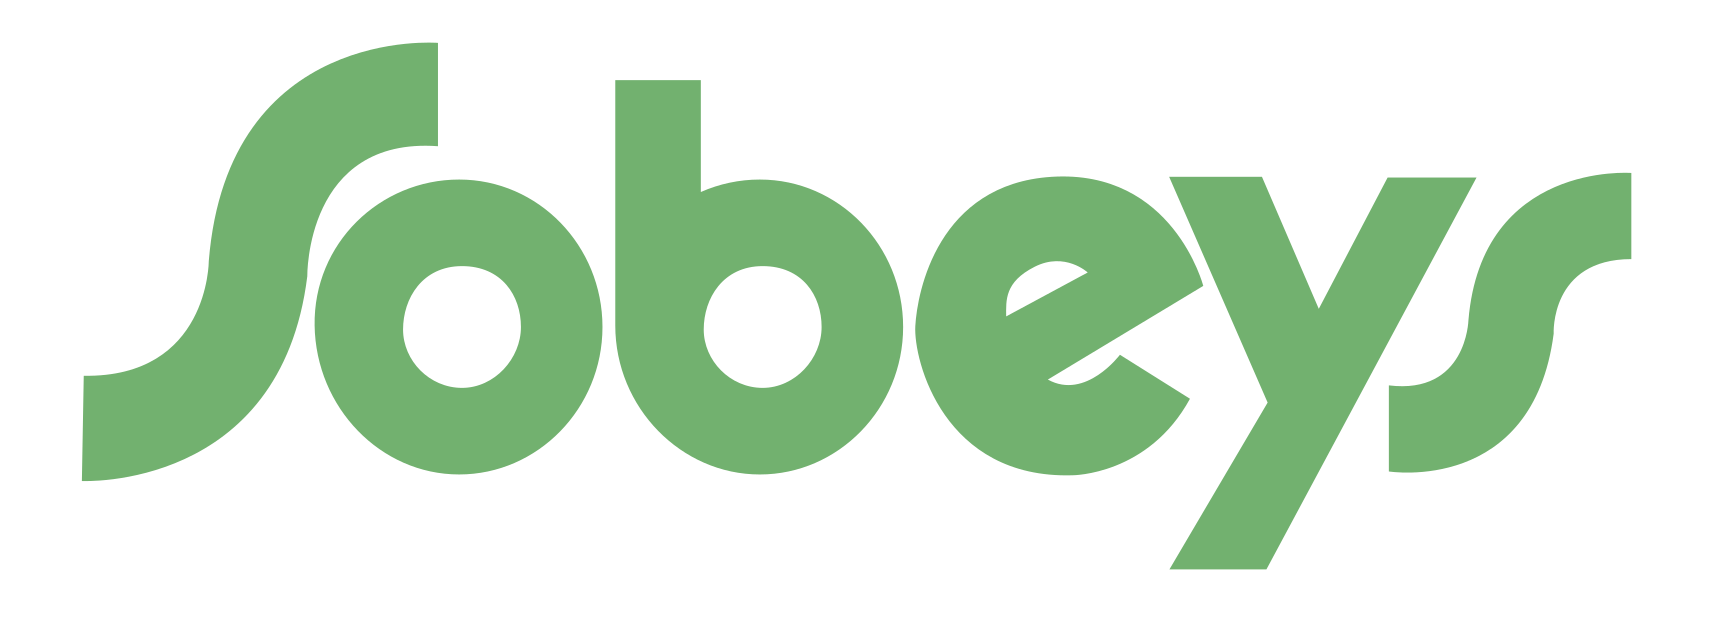 sobeys logo